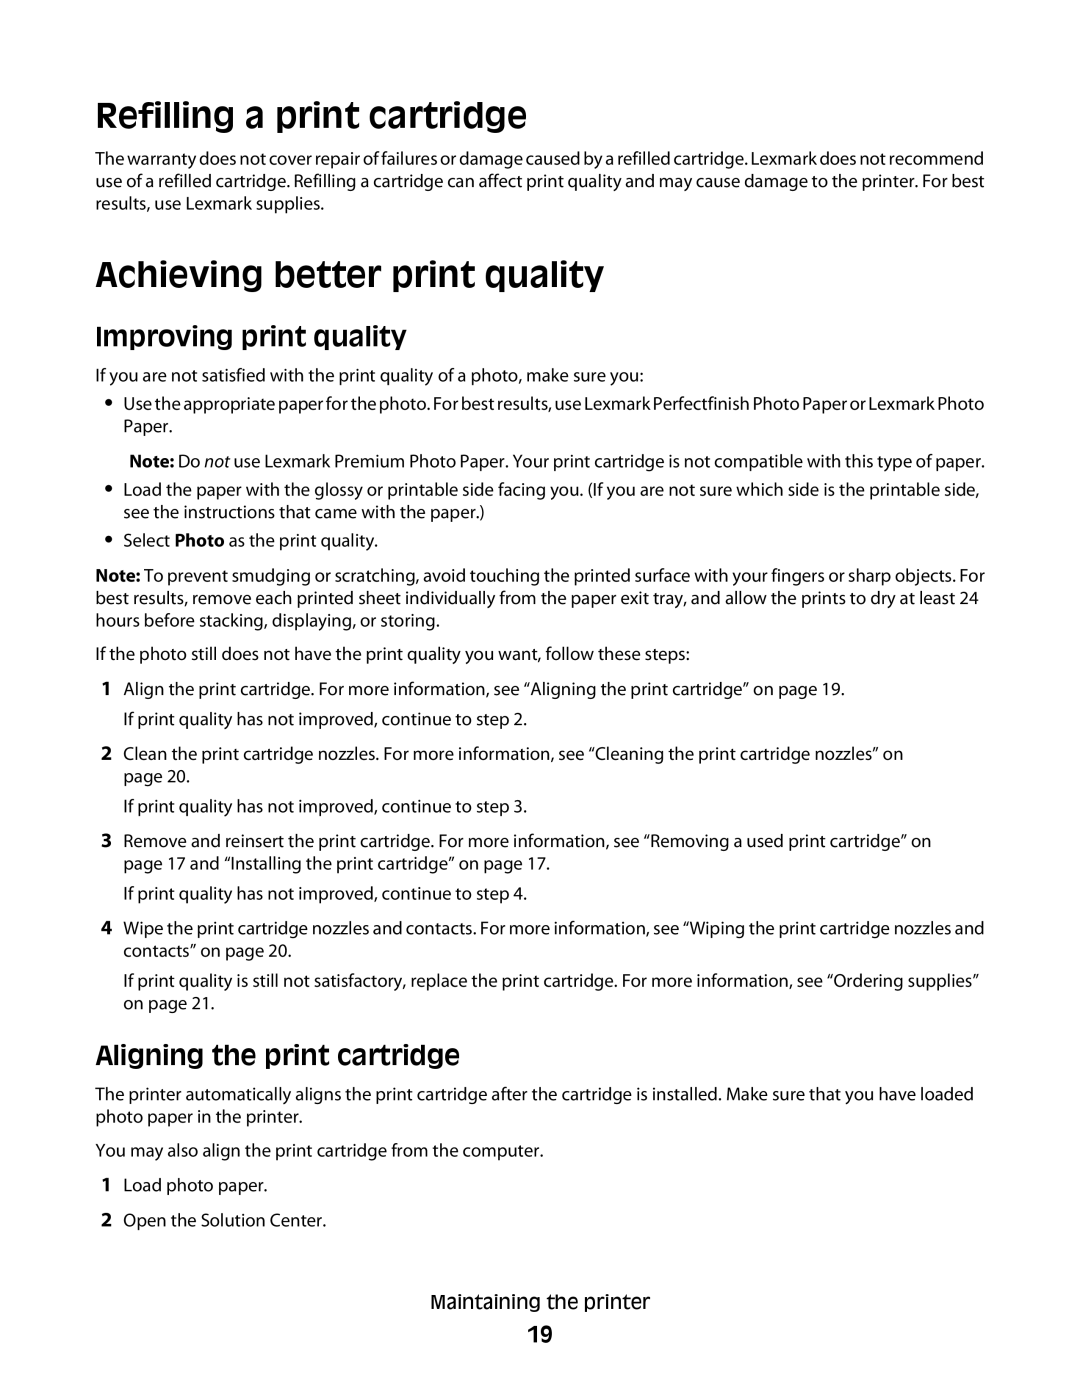 Lexmark P200 Series manual Refilling a print cartridge, Achieving better print quality, Improving print quality 